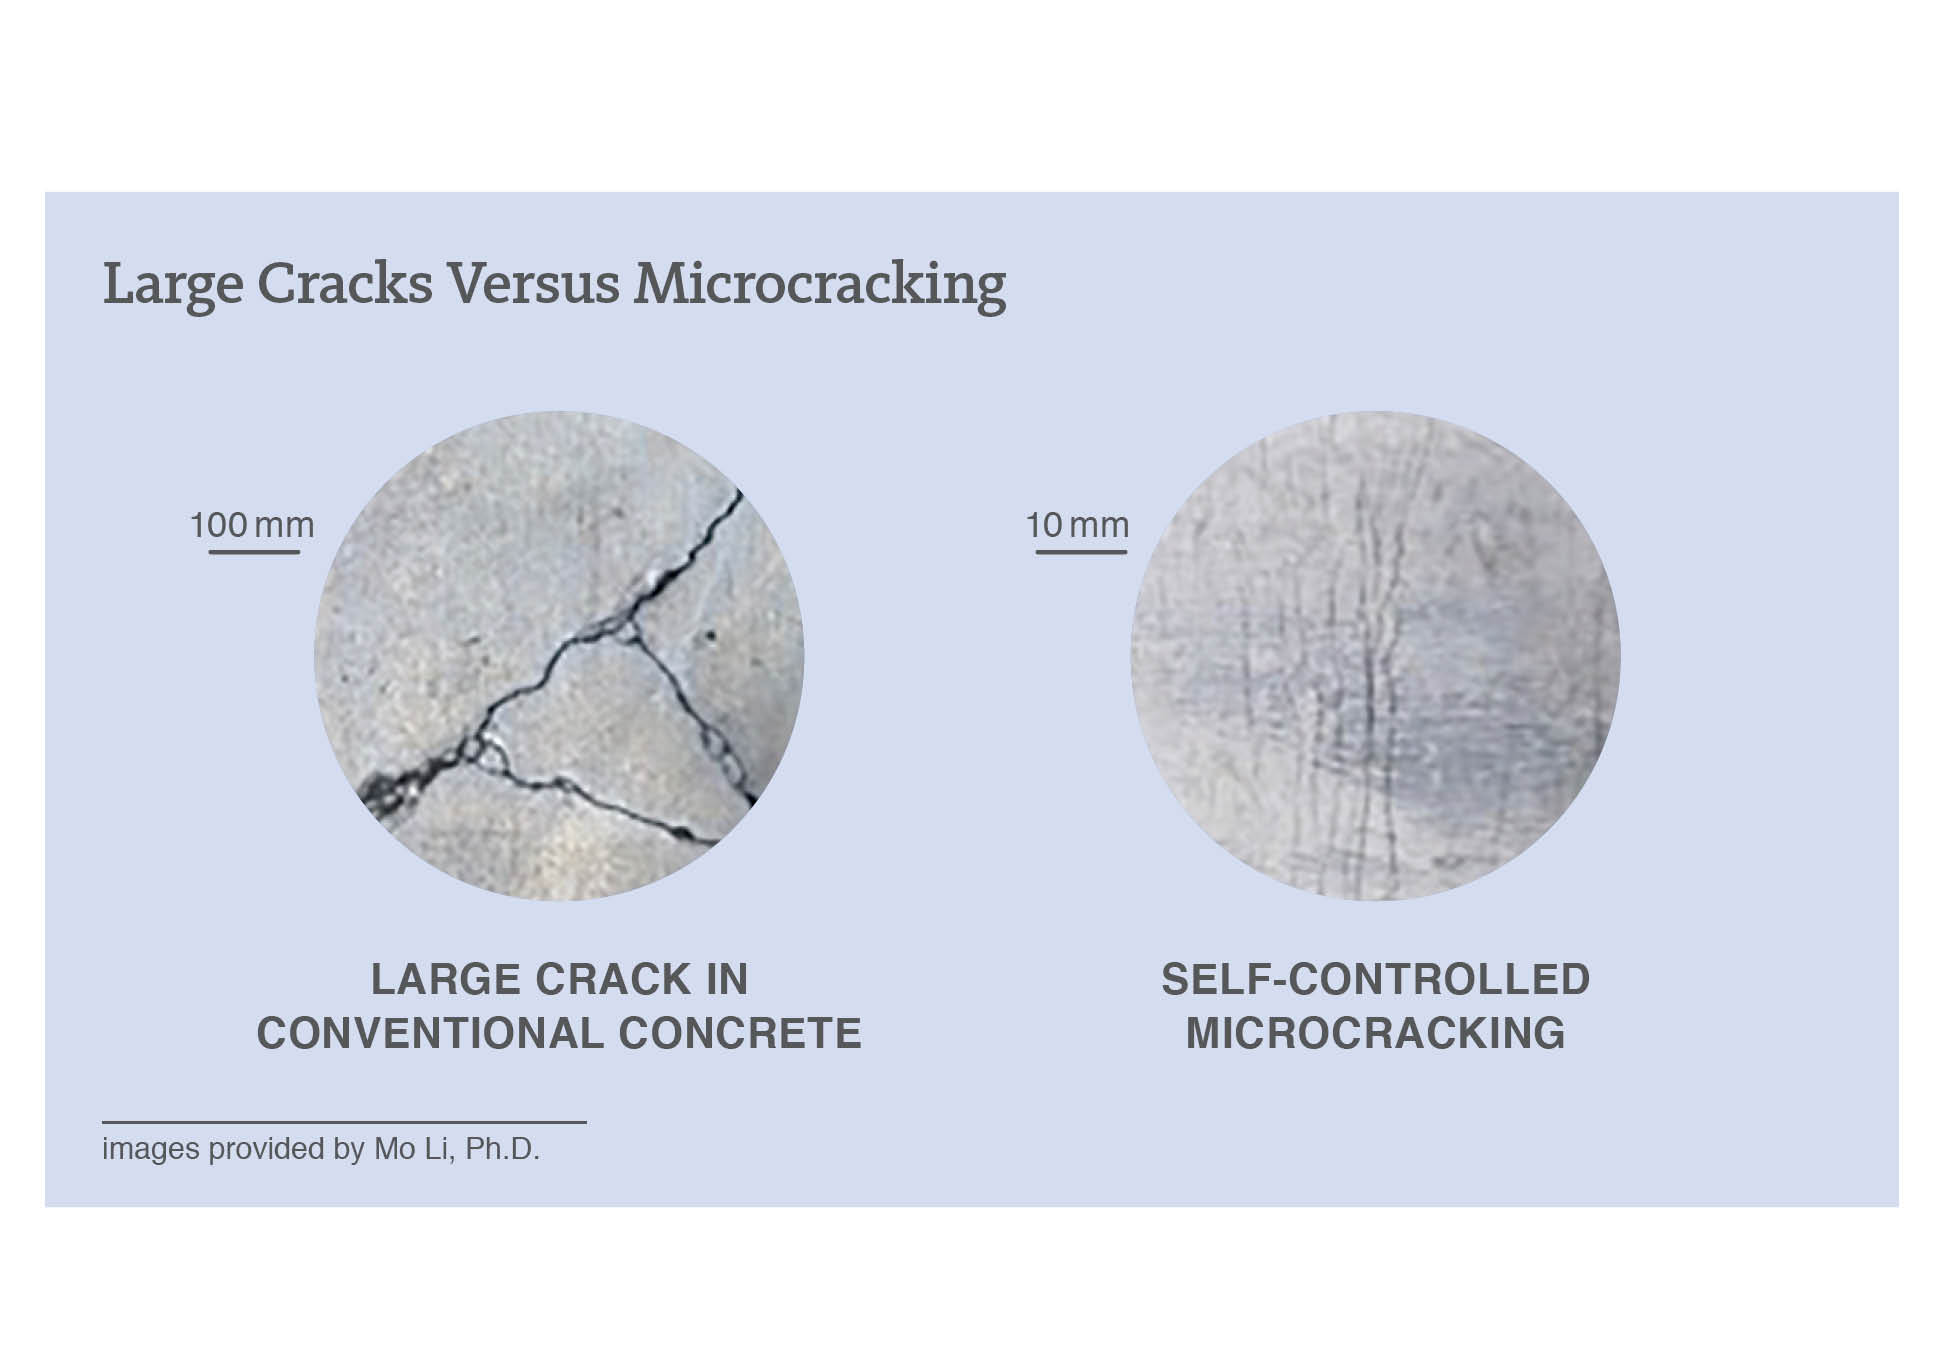 large cracks versus microcracking infographic 